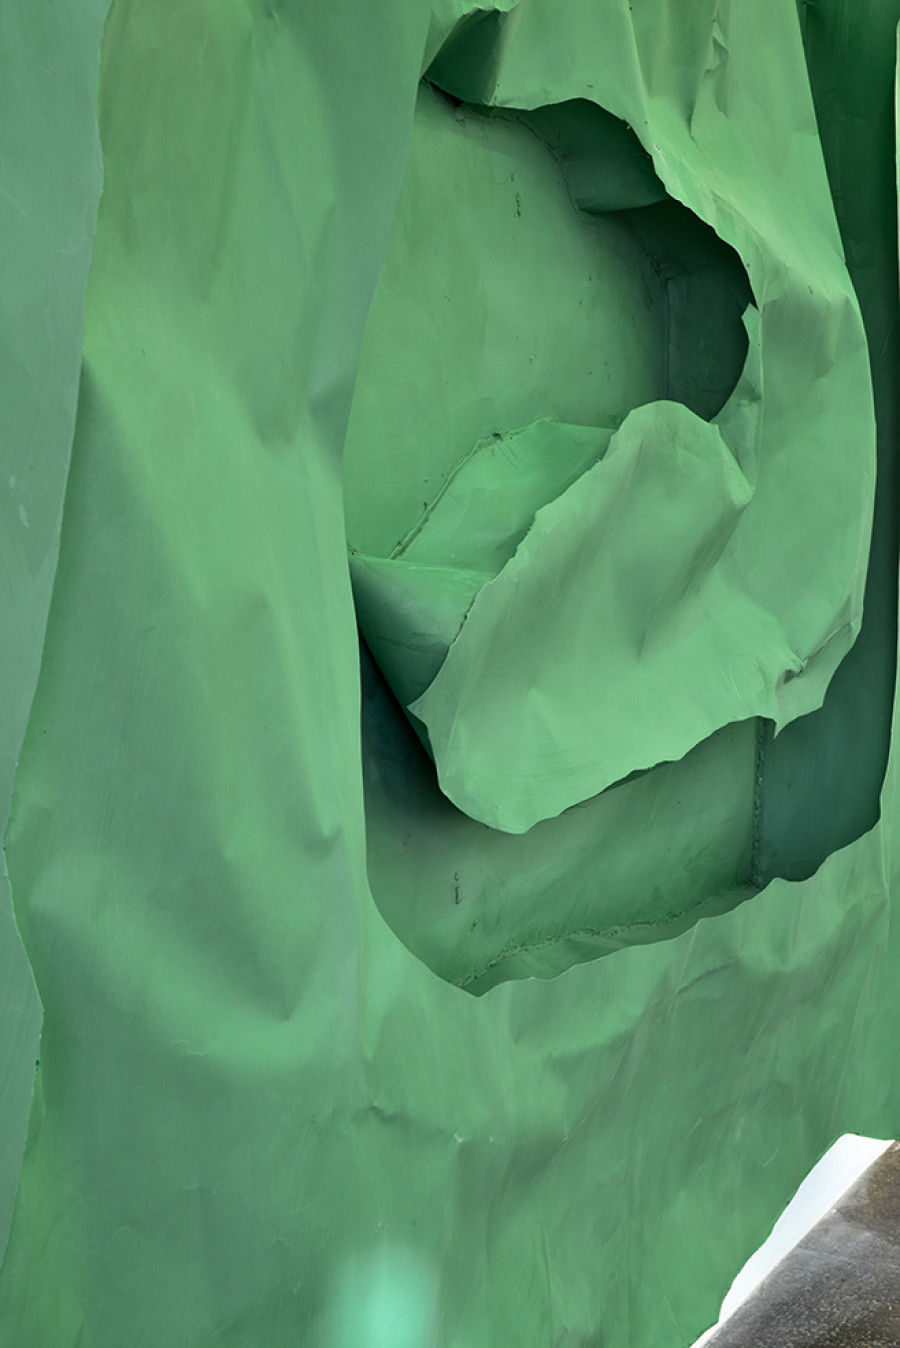 Simone Holliger, Green frame figure (detail), 2020. Courtesy: the artist; Gallery Nicolas Krupp, Basel. Photo: Kunst Halle Sankt Gallen, Sebastian Schaub